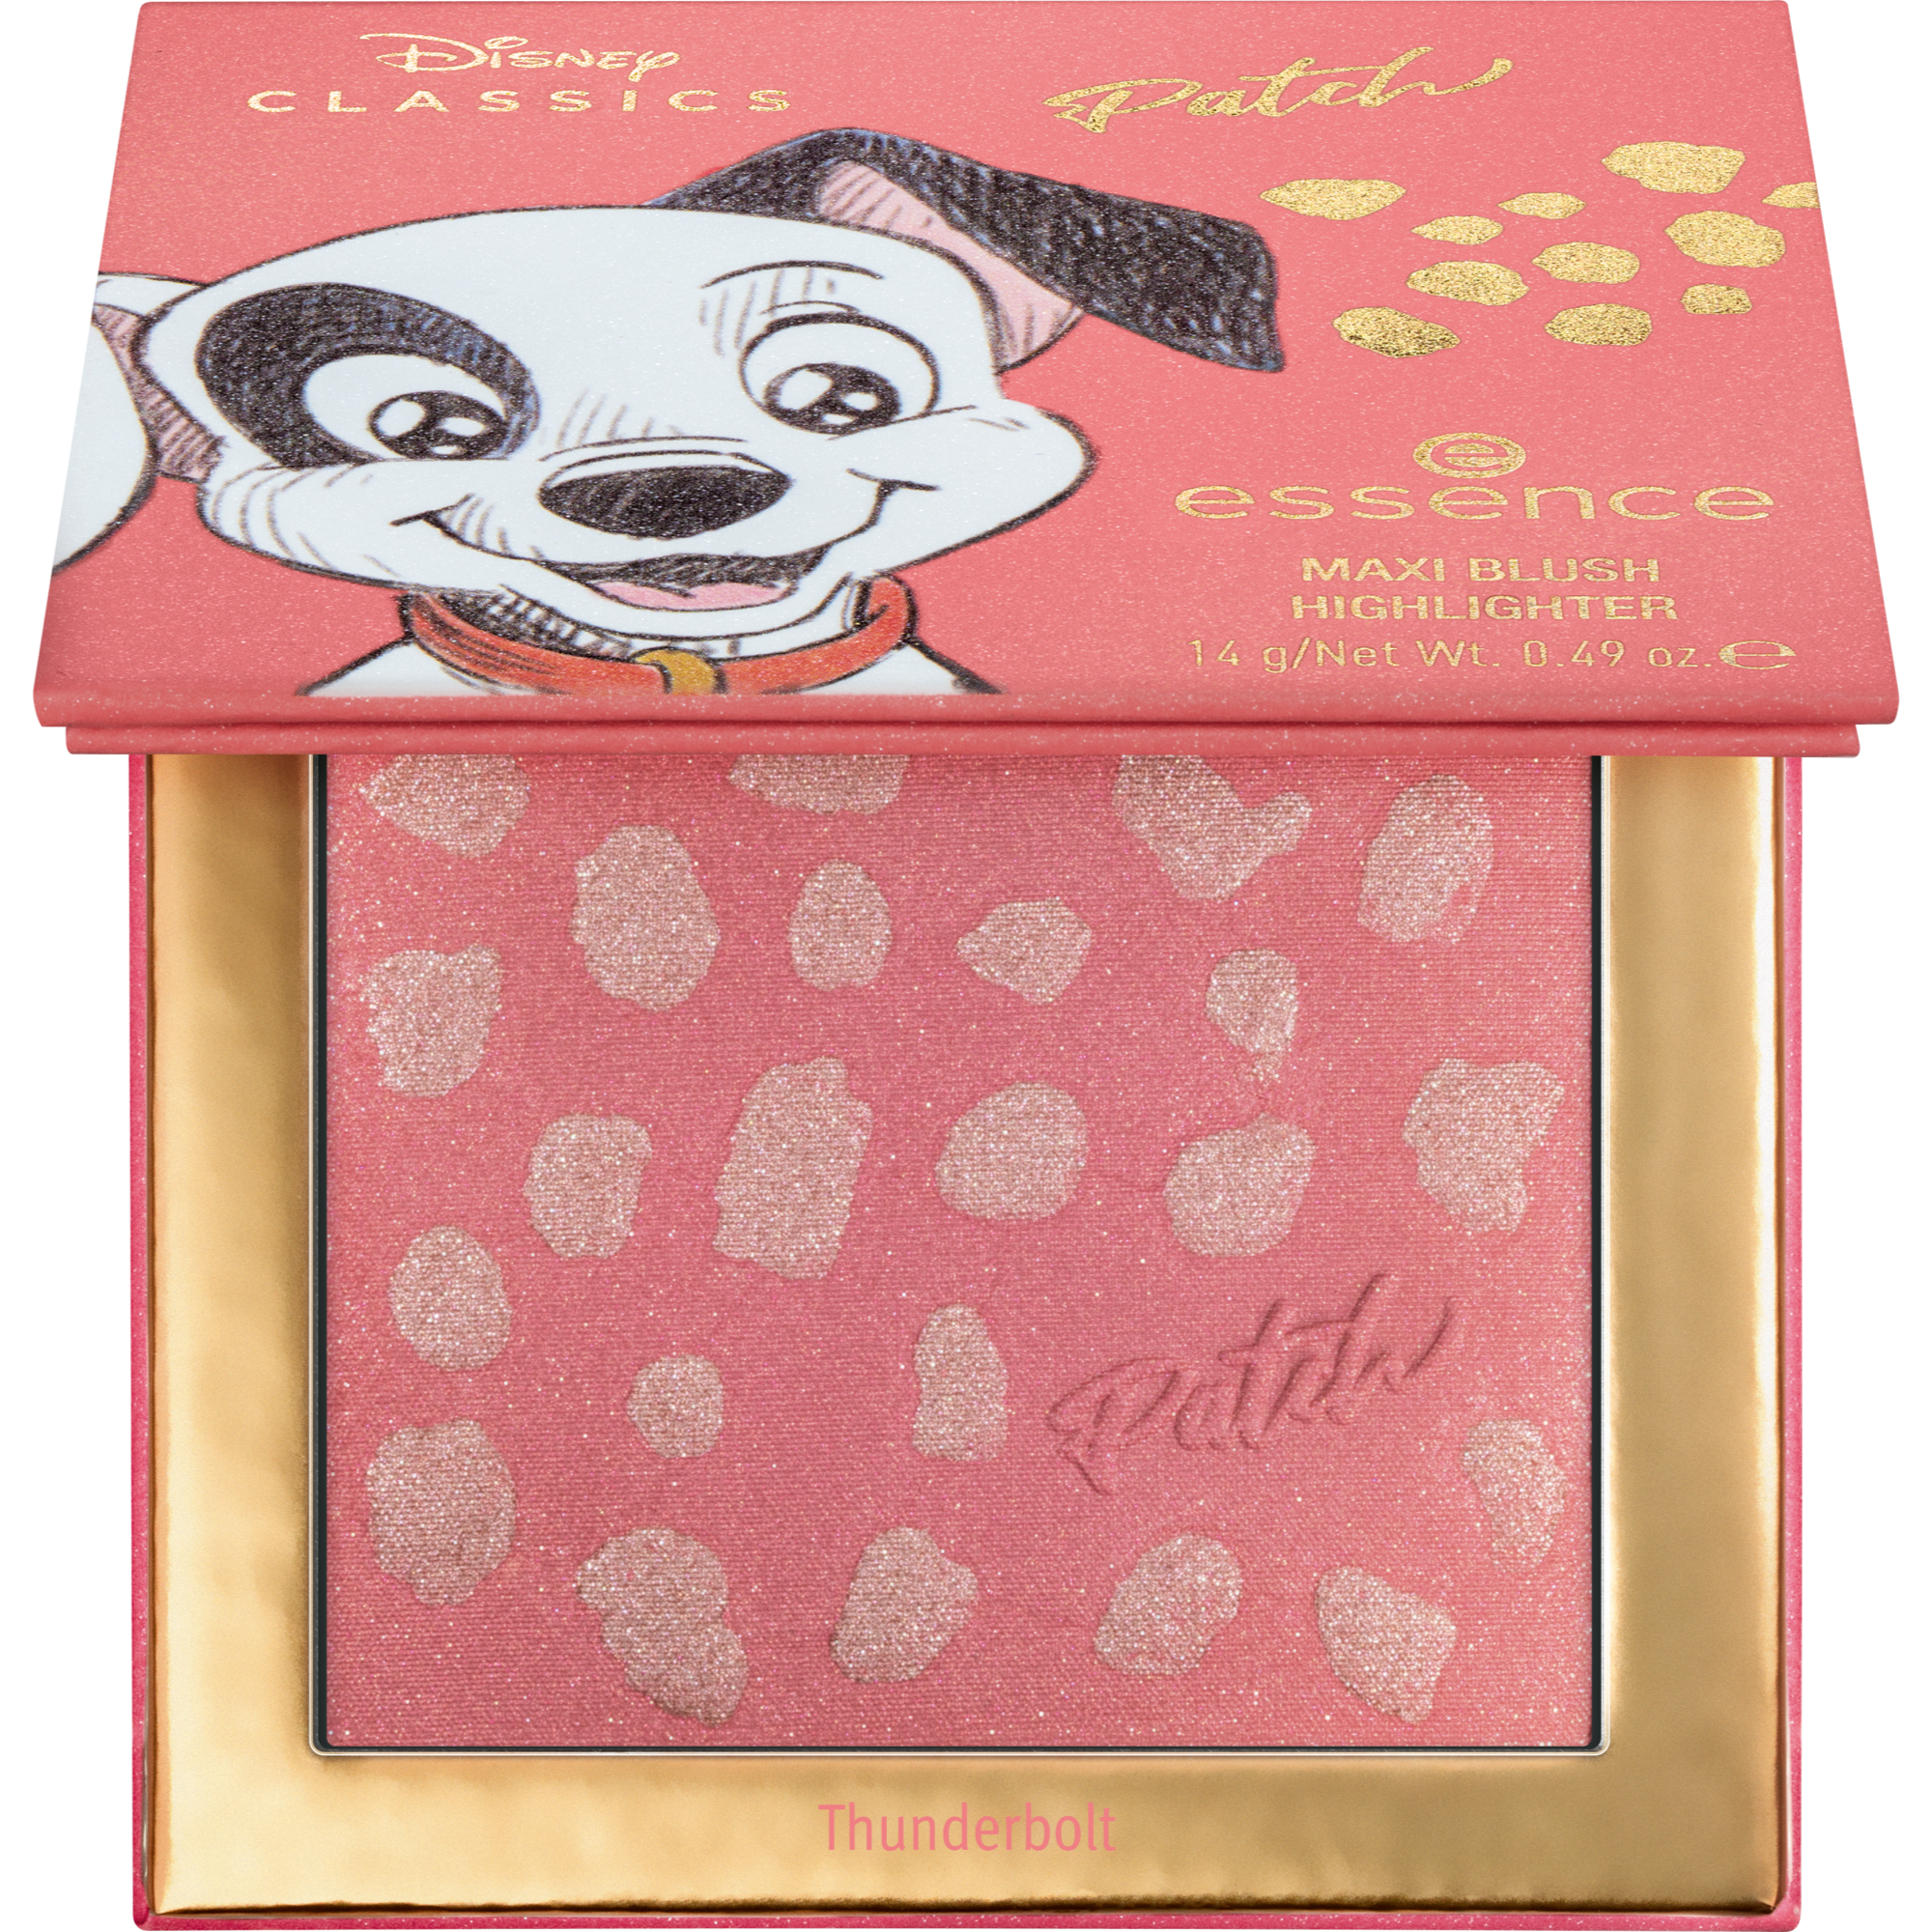 Disney Classics Patch maxi blush highlighter